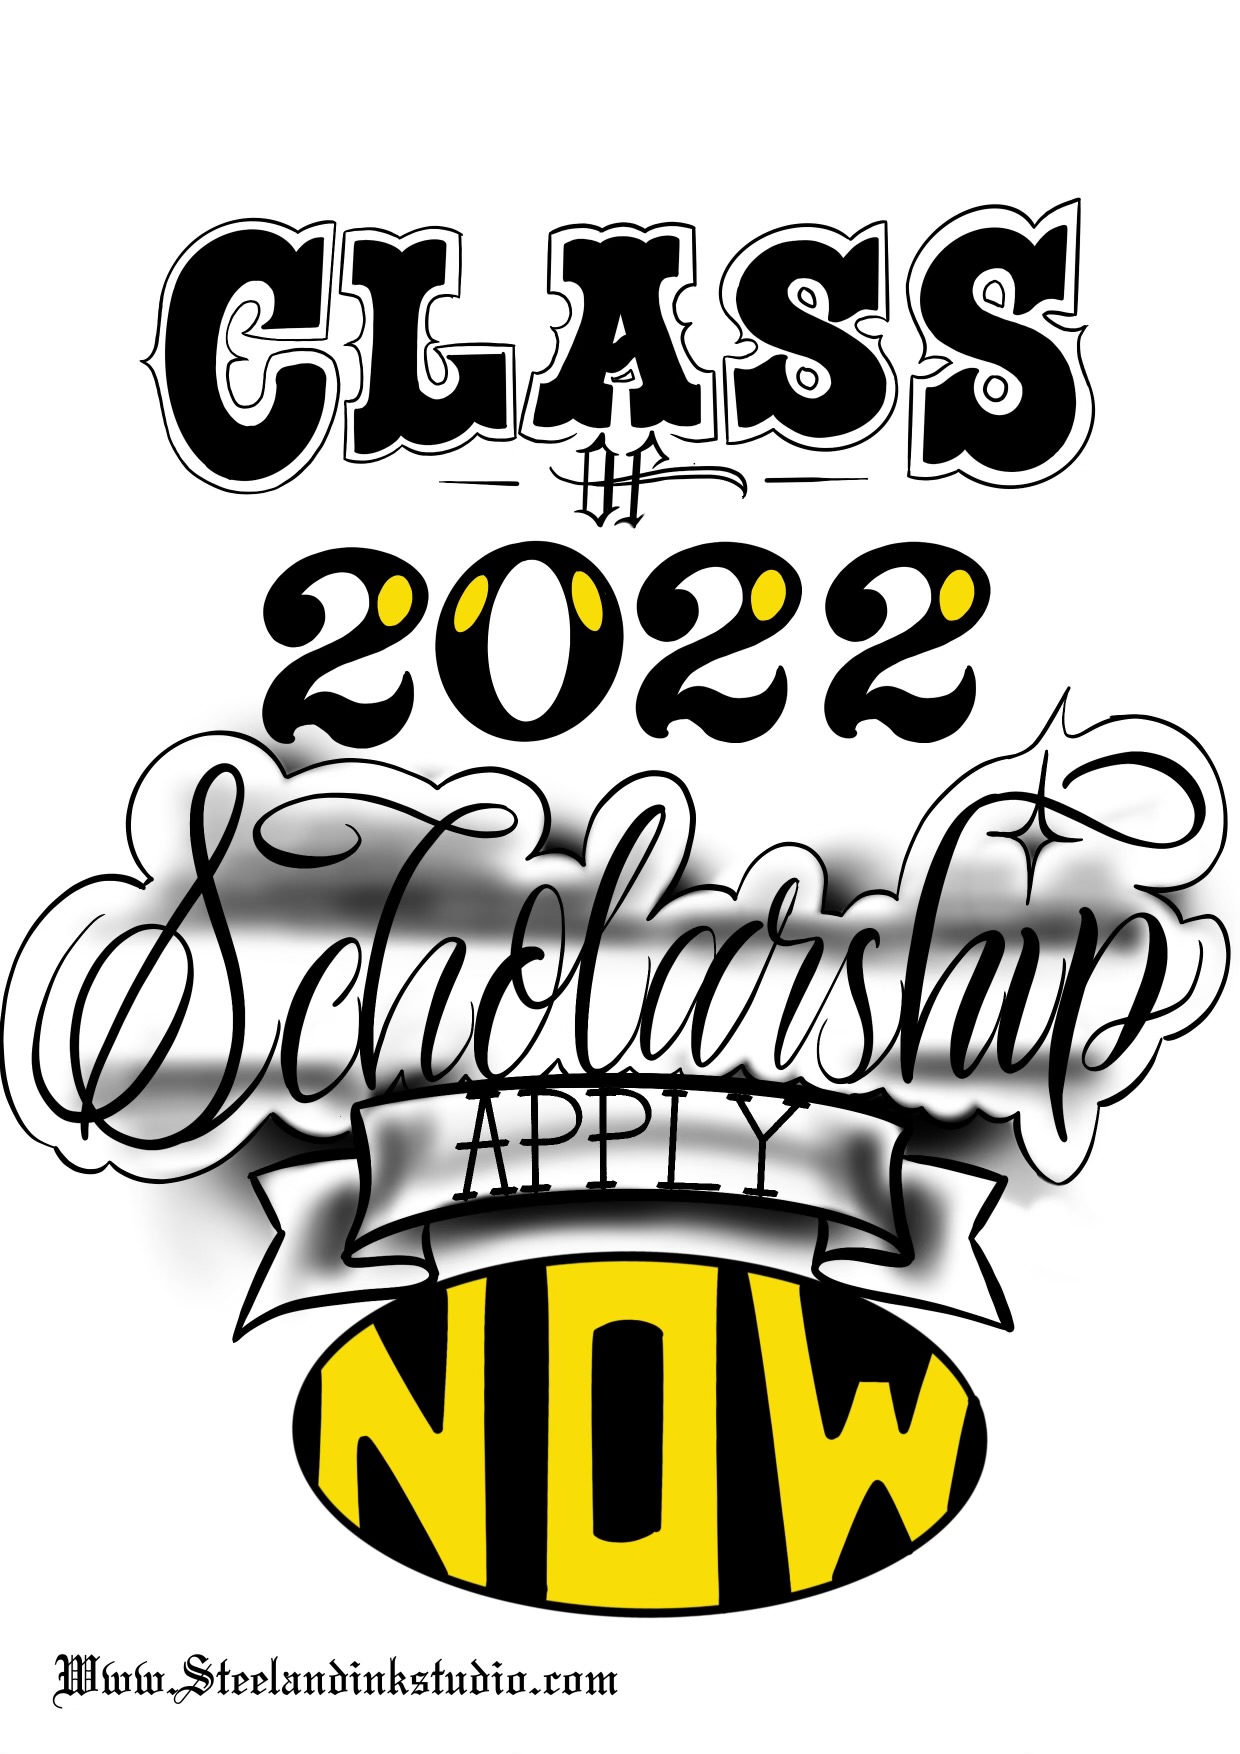 Class of 2022 Scholarship application